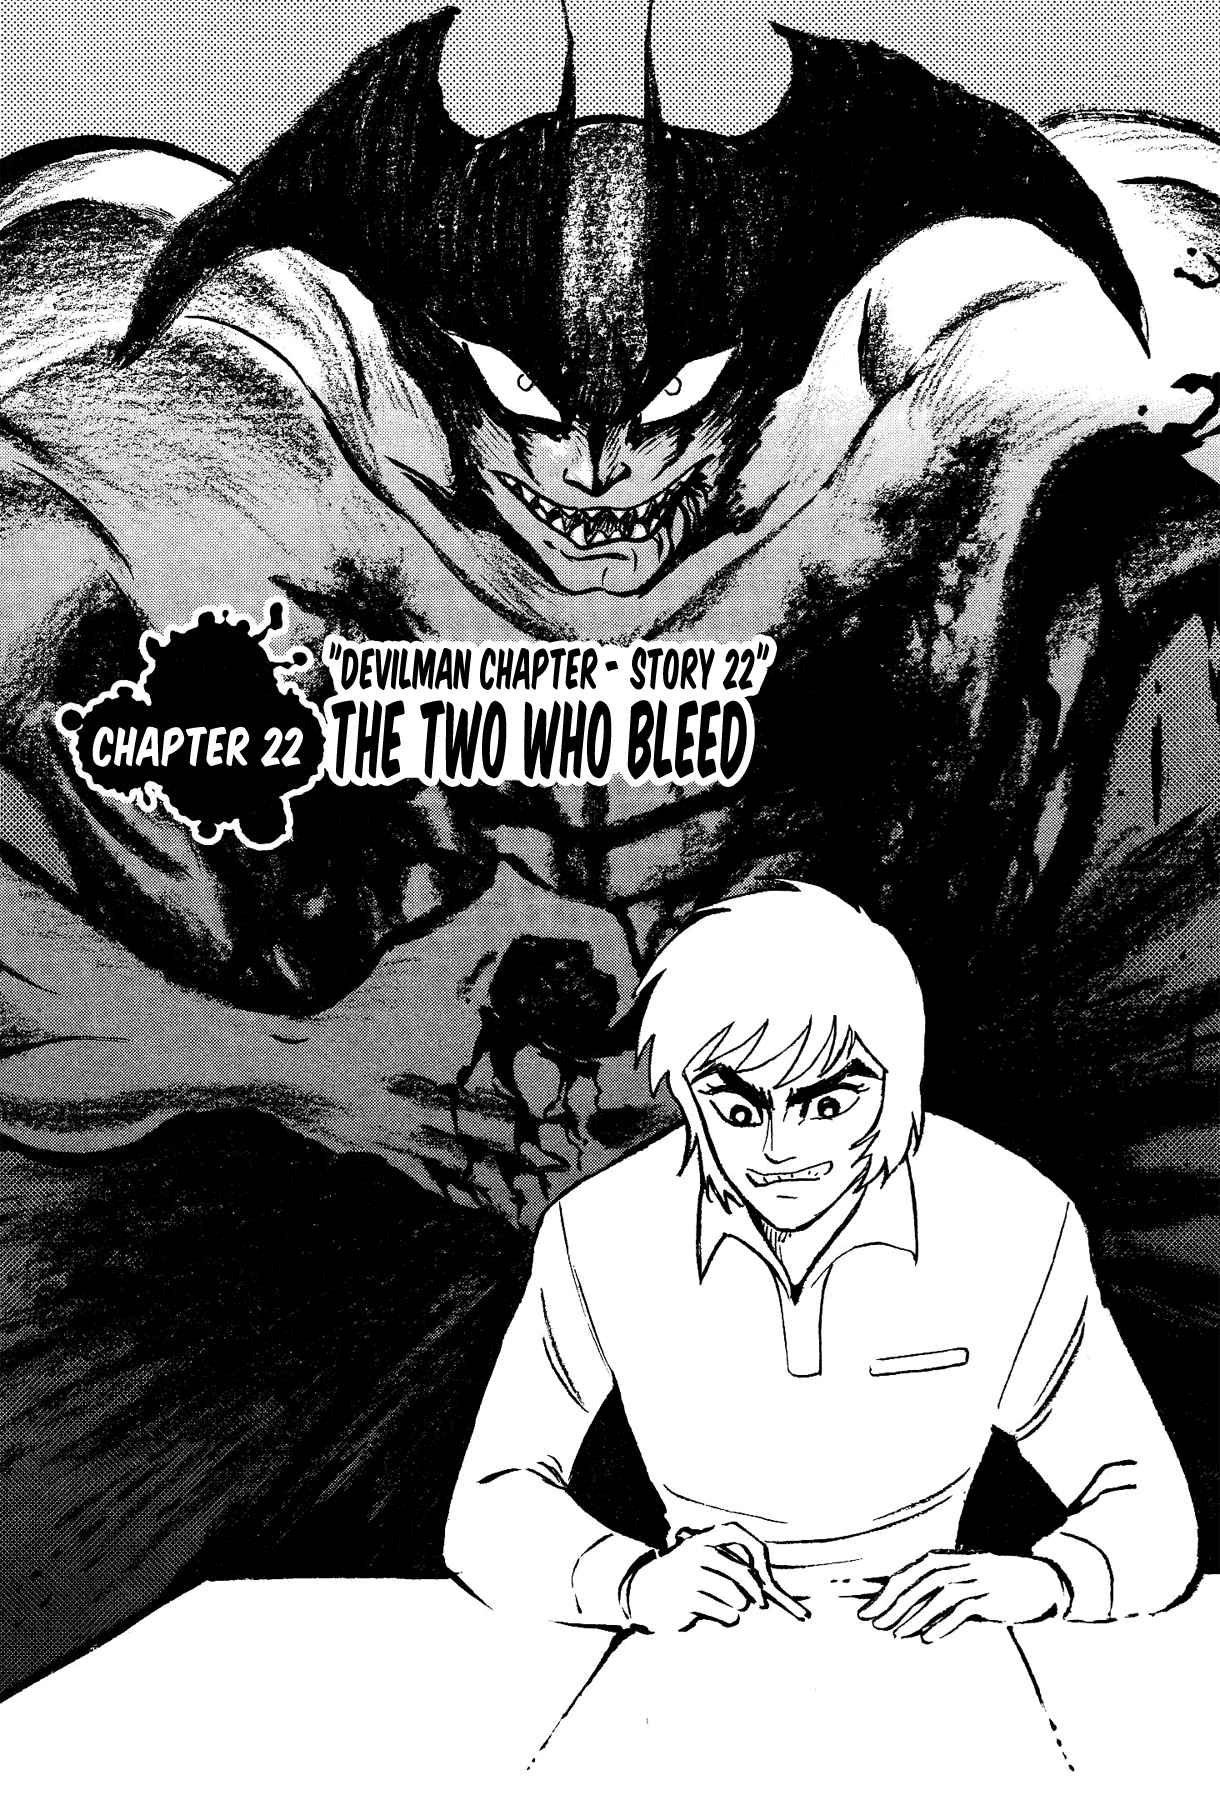 Gekiman! Devilman Chapter Vol. 3 Ch. 22 The Two Who Bleed